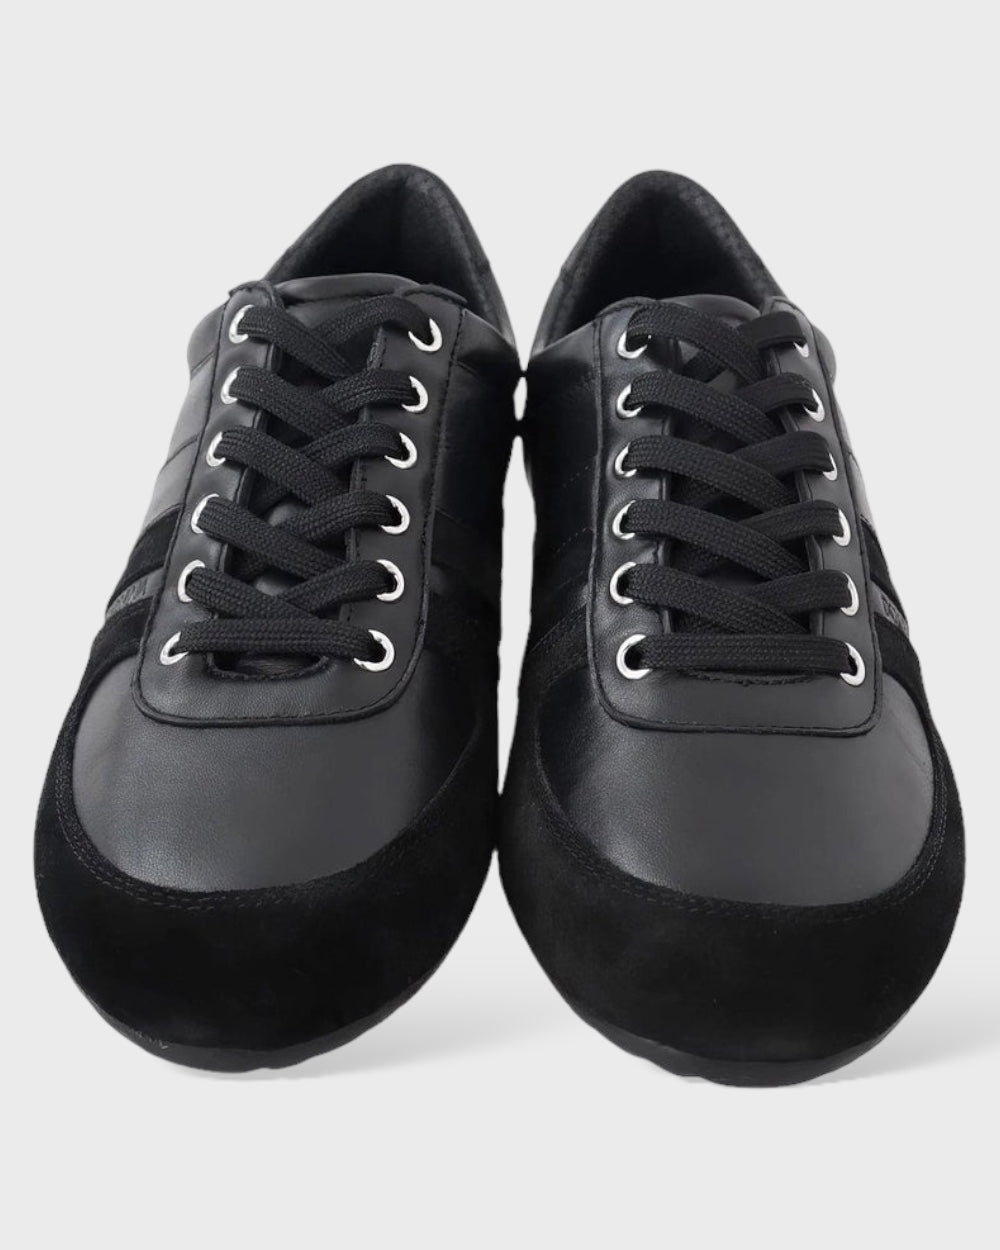 Dolce & Gabbana Zwarte Leren Casual Sneakers